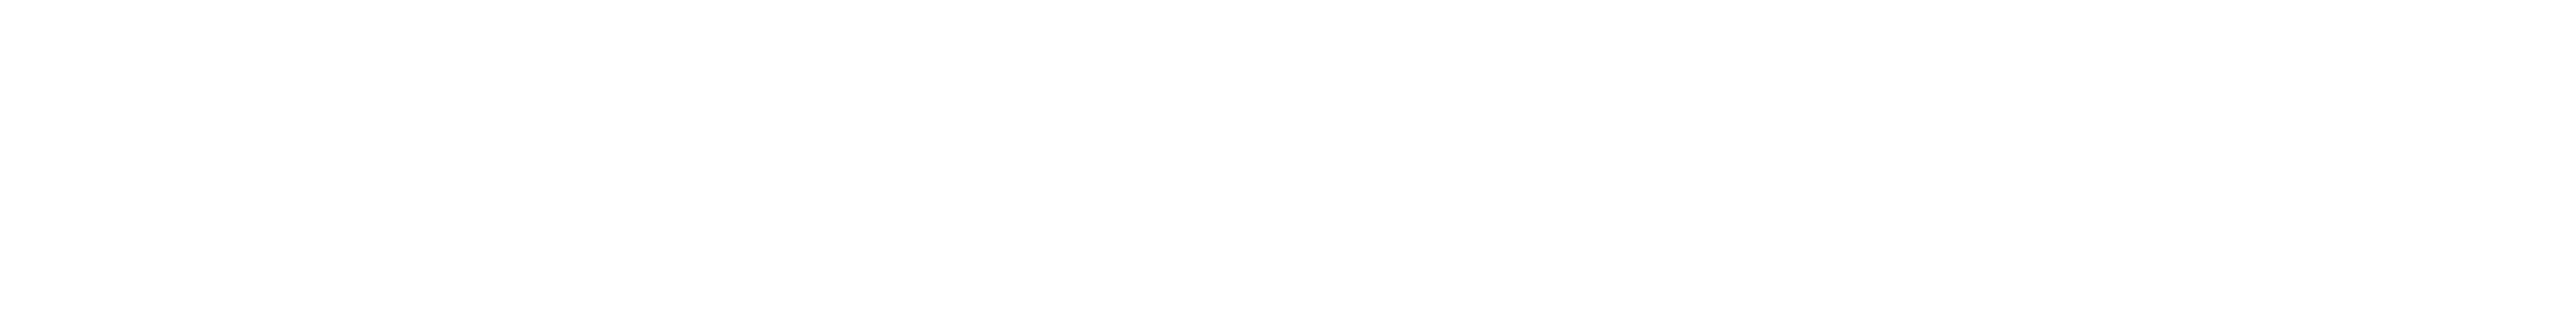 Logo-white-use-on-any-dark-background